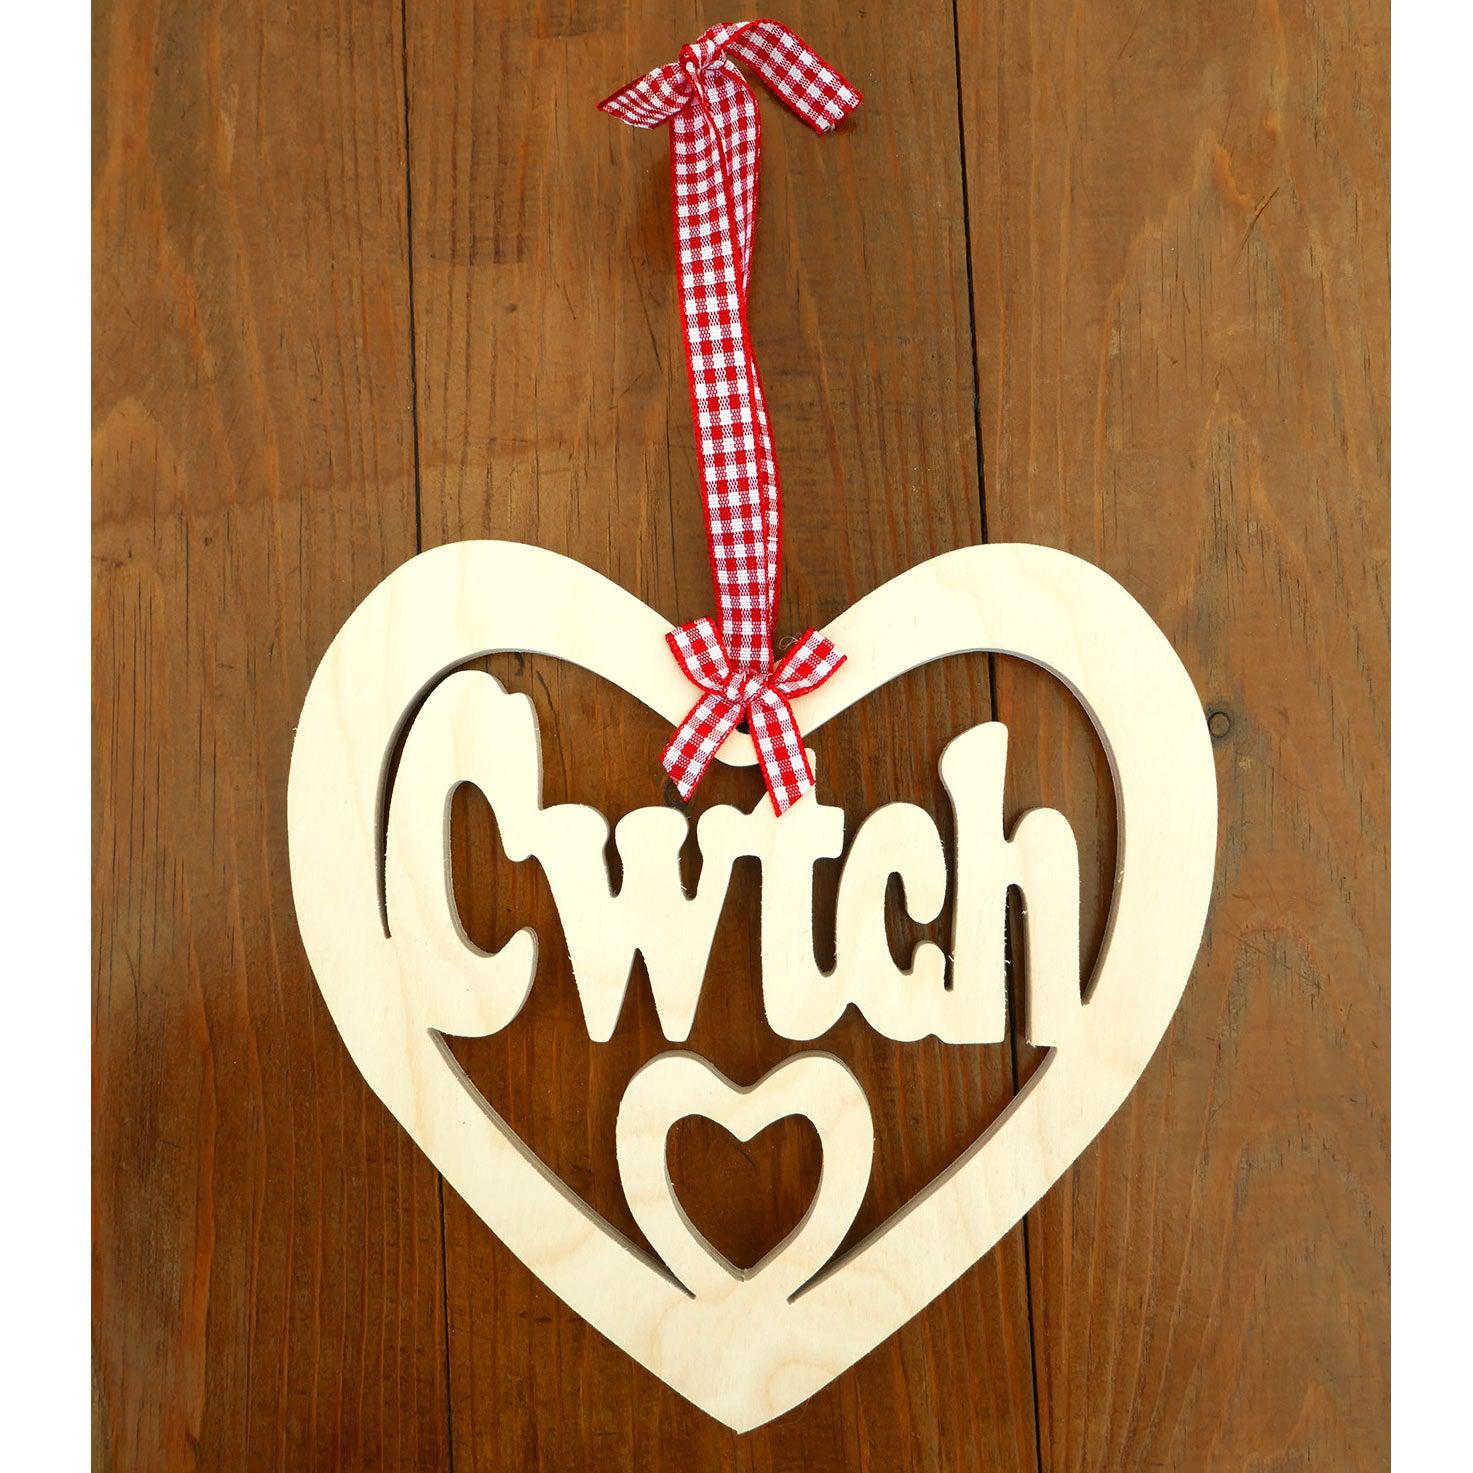 Decoration - Cwtch / Cwtsh - Cuddle - Wooden